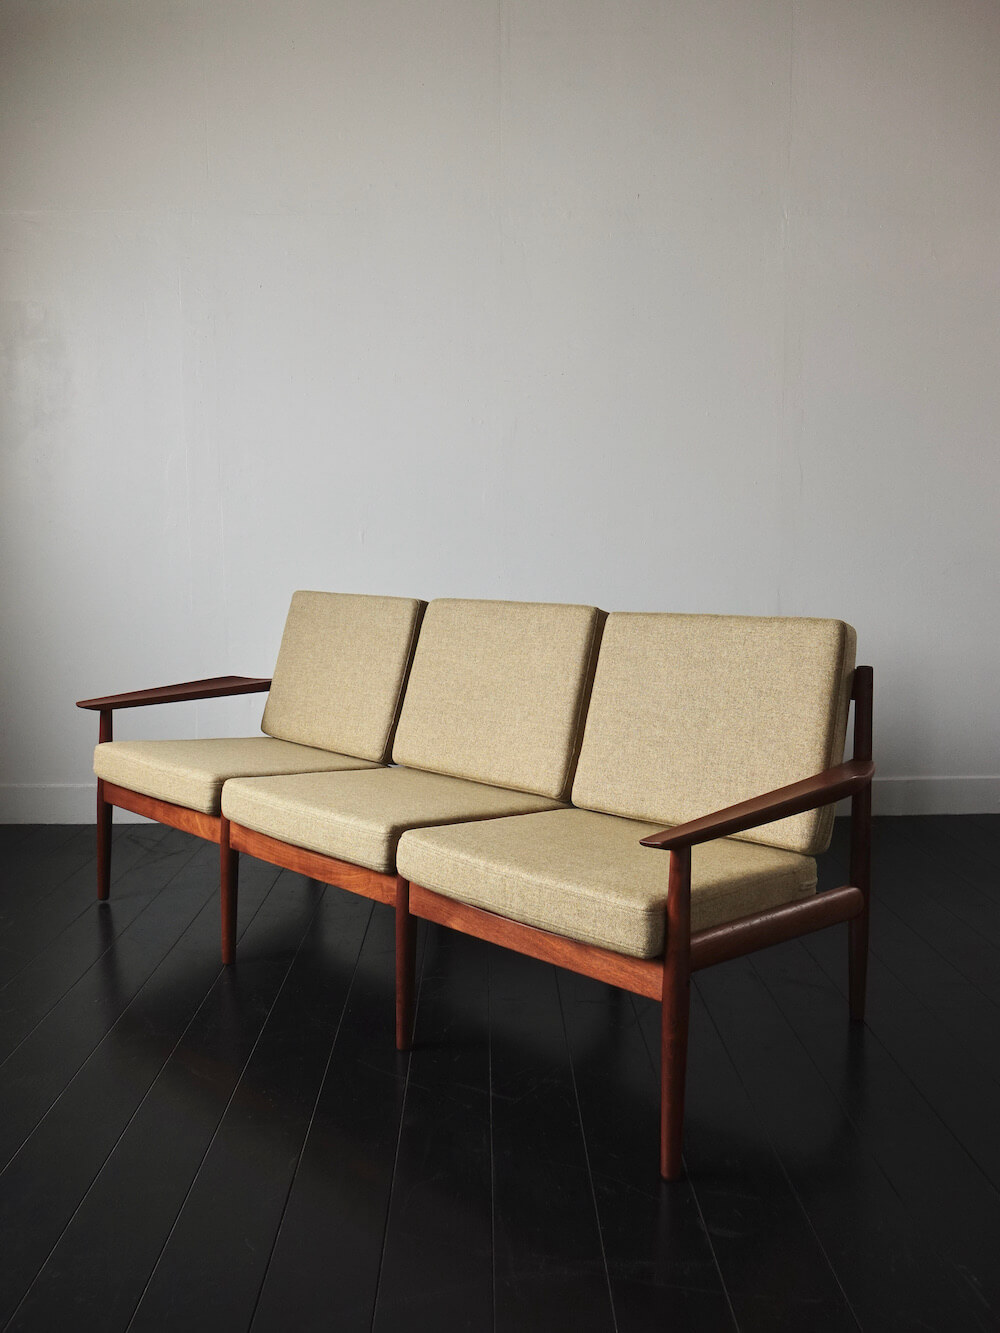 Sofa by Arne Vodder for Glostrup Mobelfabrik